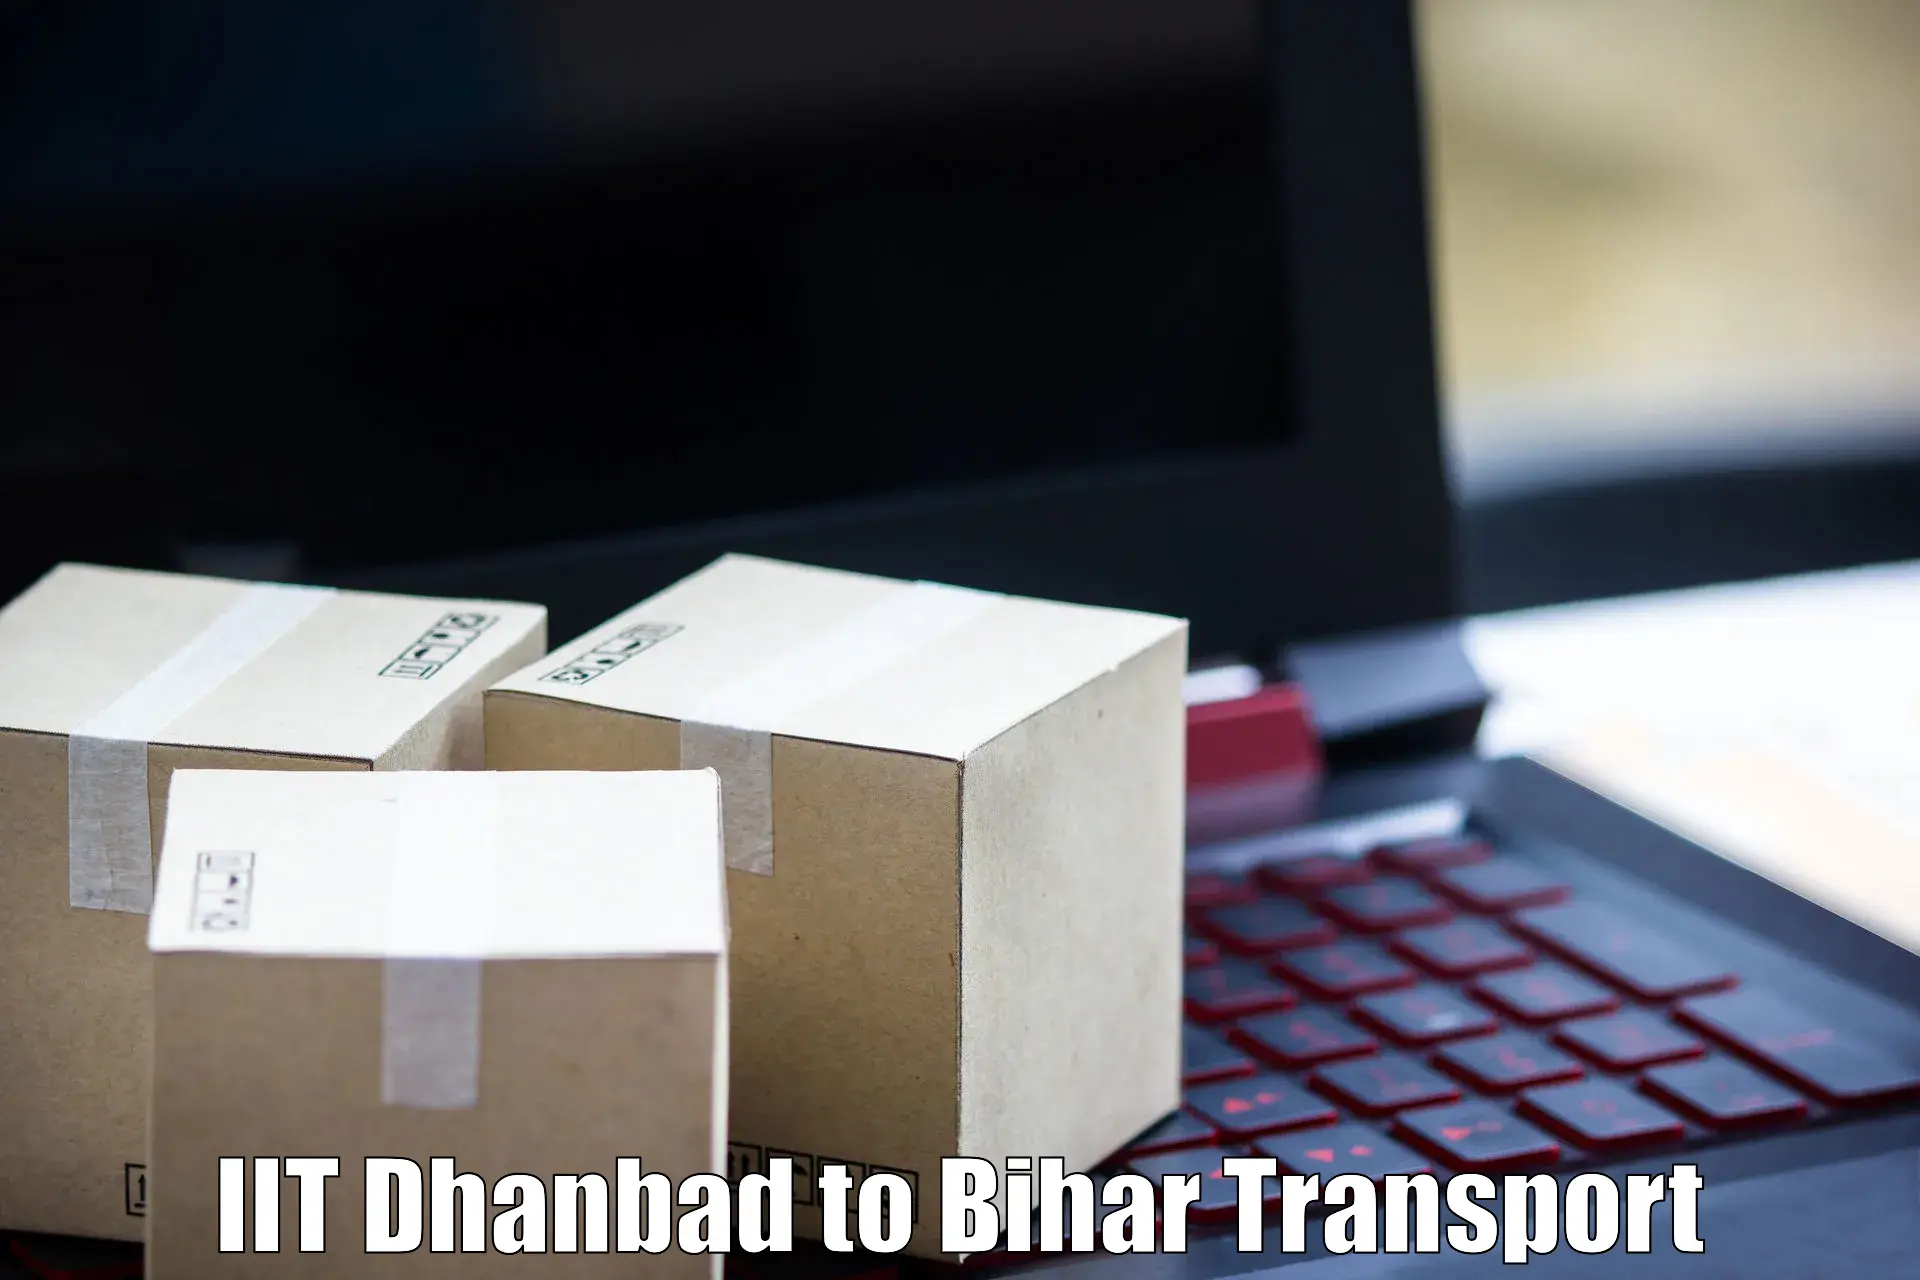 Bike transport service in IIT Dhanbad to Bihar Sharif